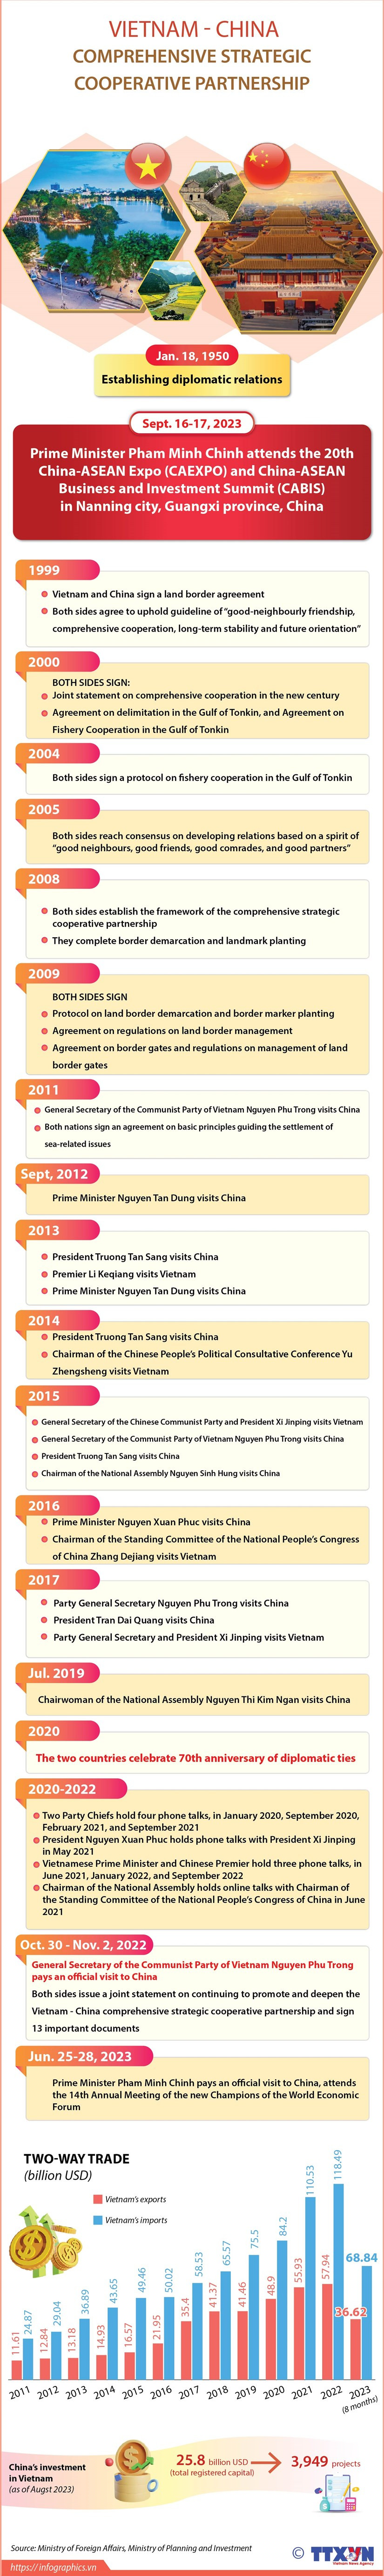 Vietnam-China comprehensive strategic cooperative partnership hinh anh 1